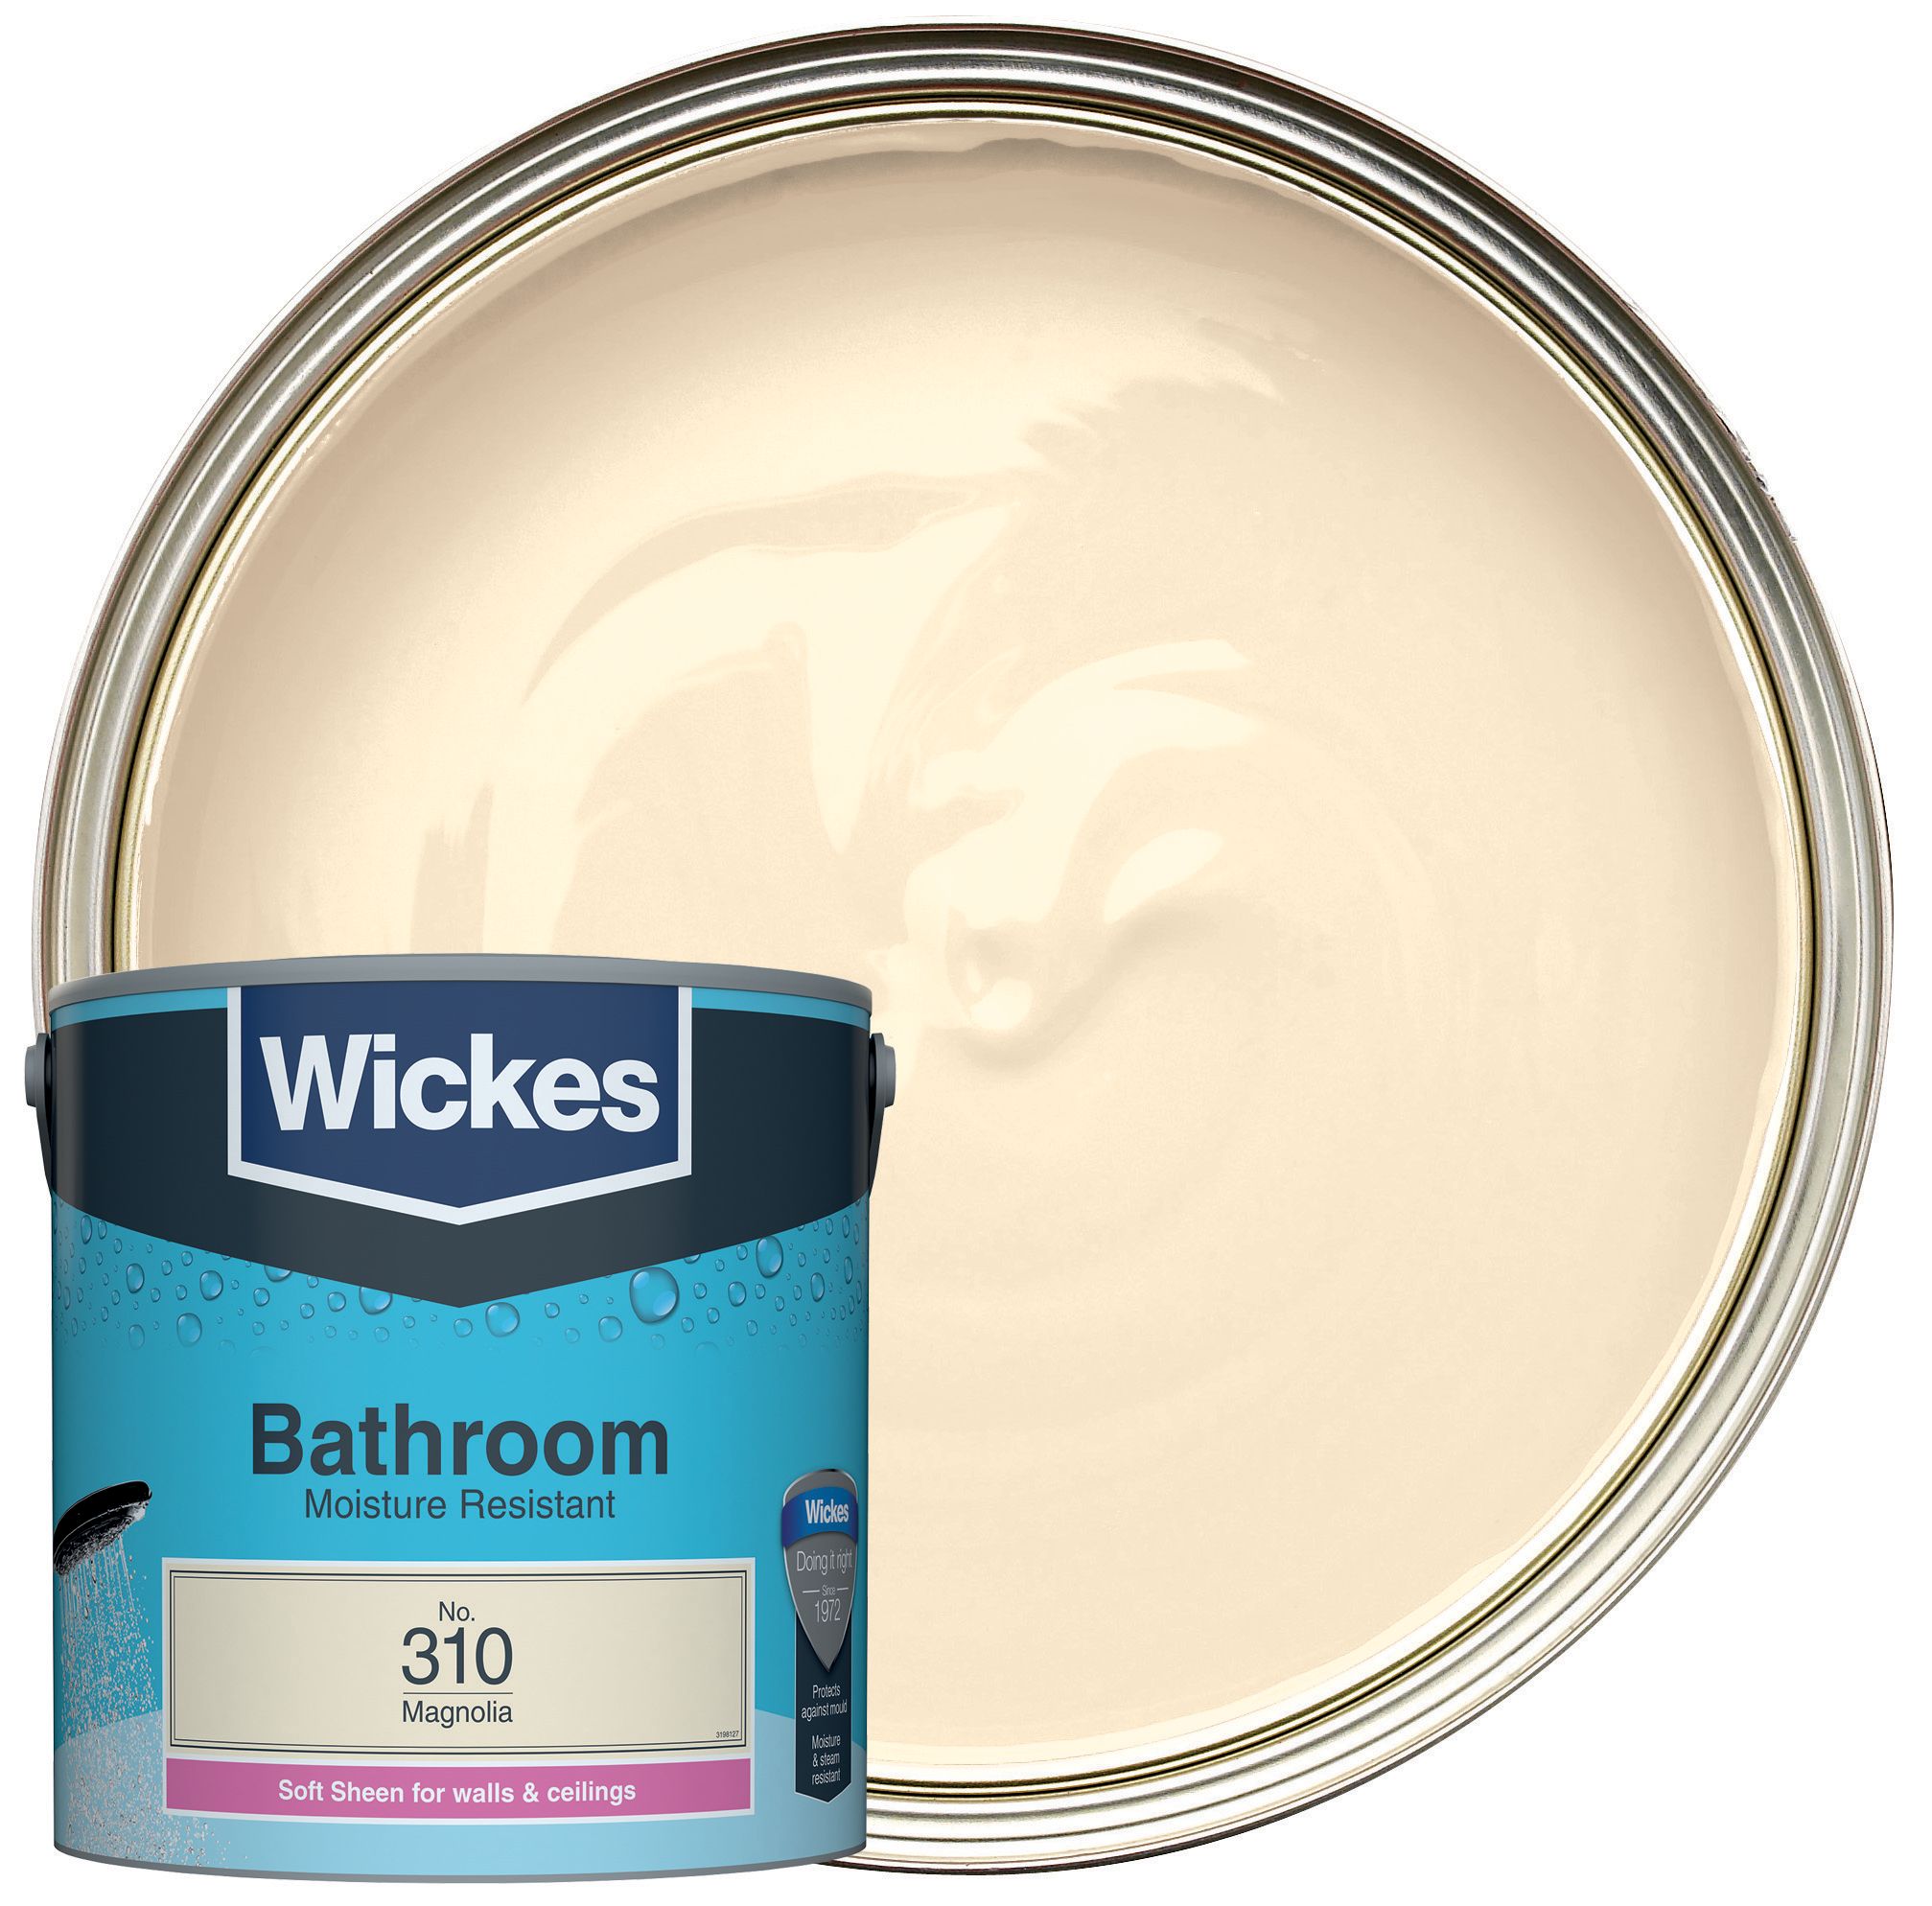 Image of Wickes Bathroom Soft Sheen Emulsion Paint - Magnolia No.310 - 2.5L